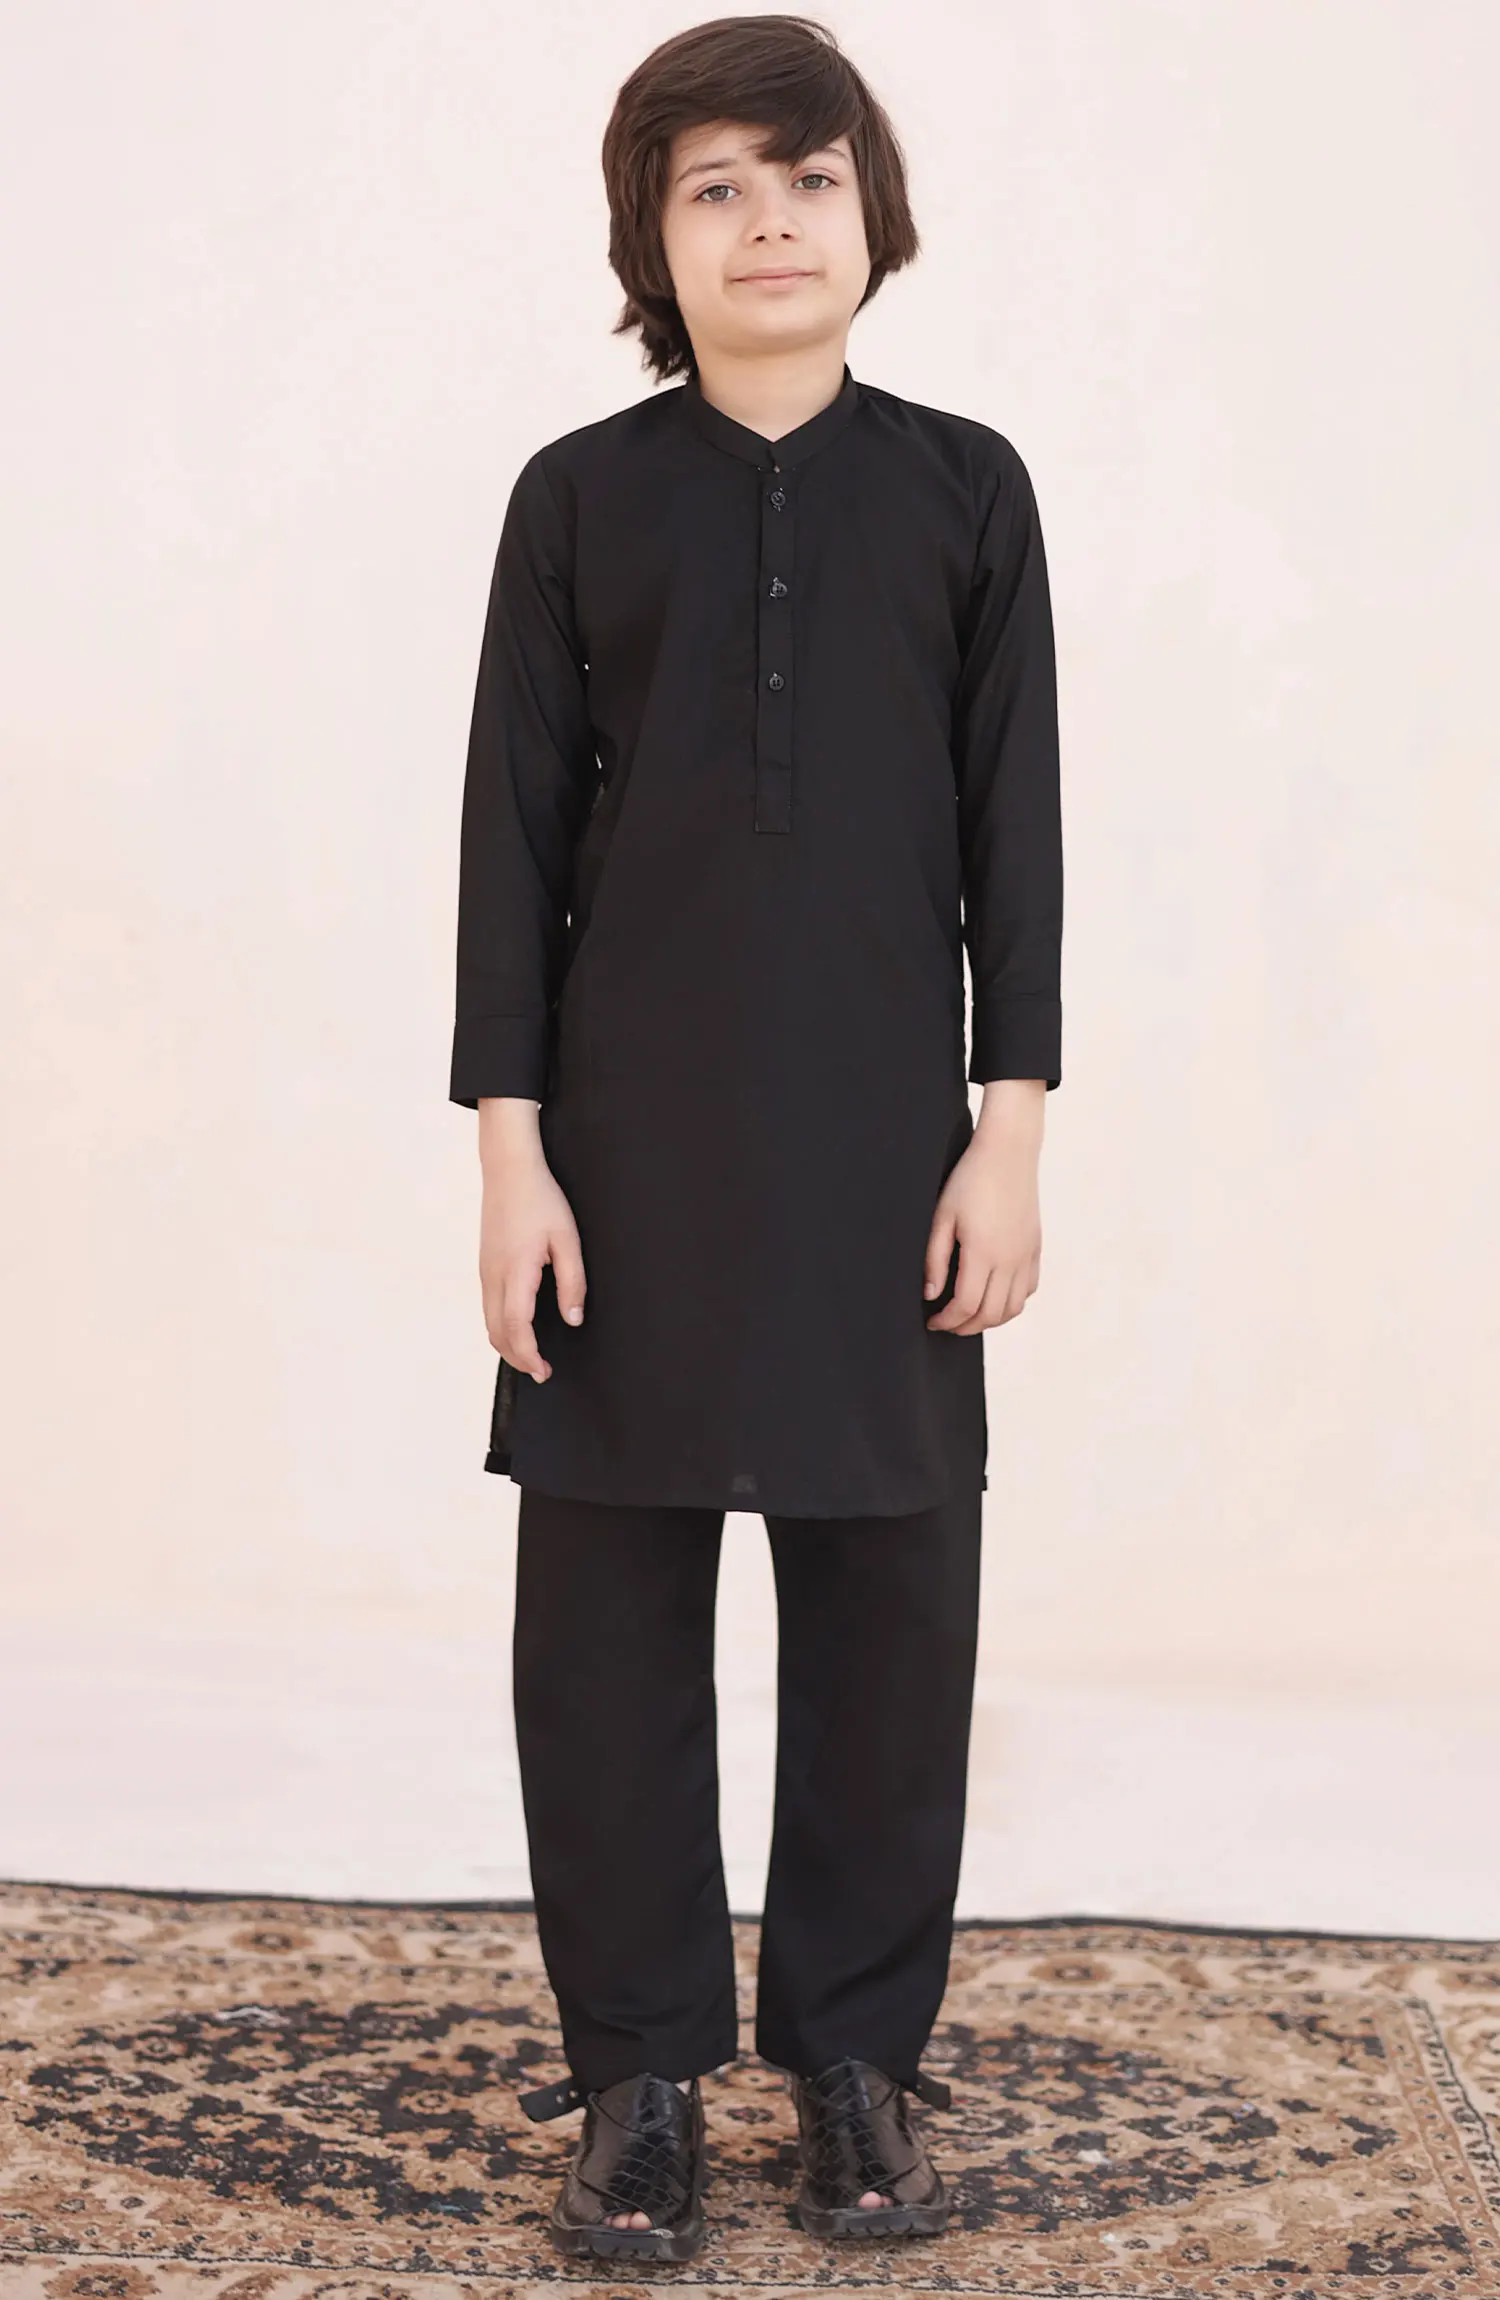 Ramazan Edit Kurta Trouser Collection By Hassan Jee - KT 27 Jade Black Kurta Trouser